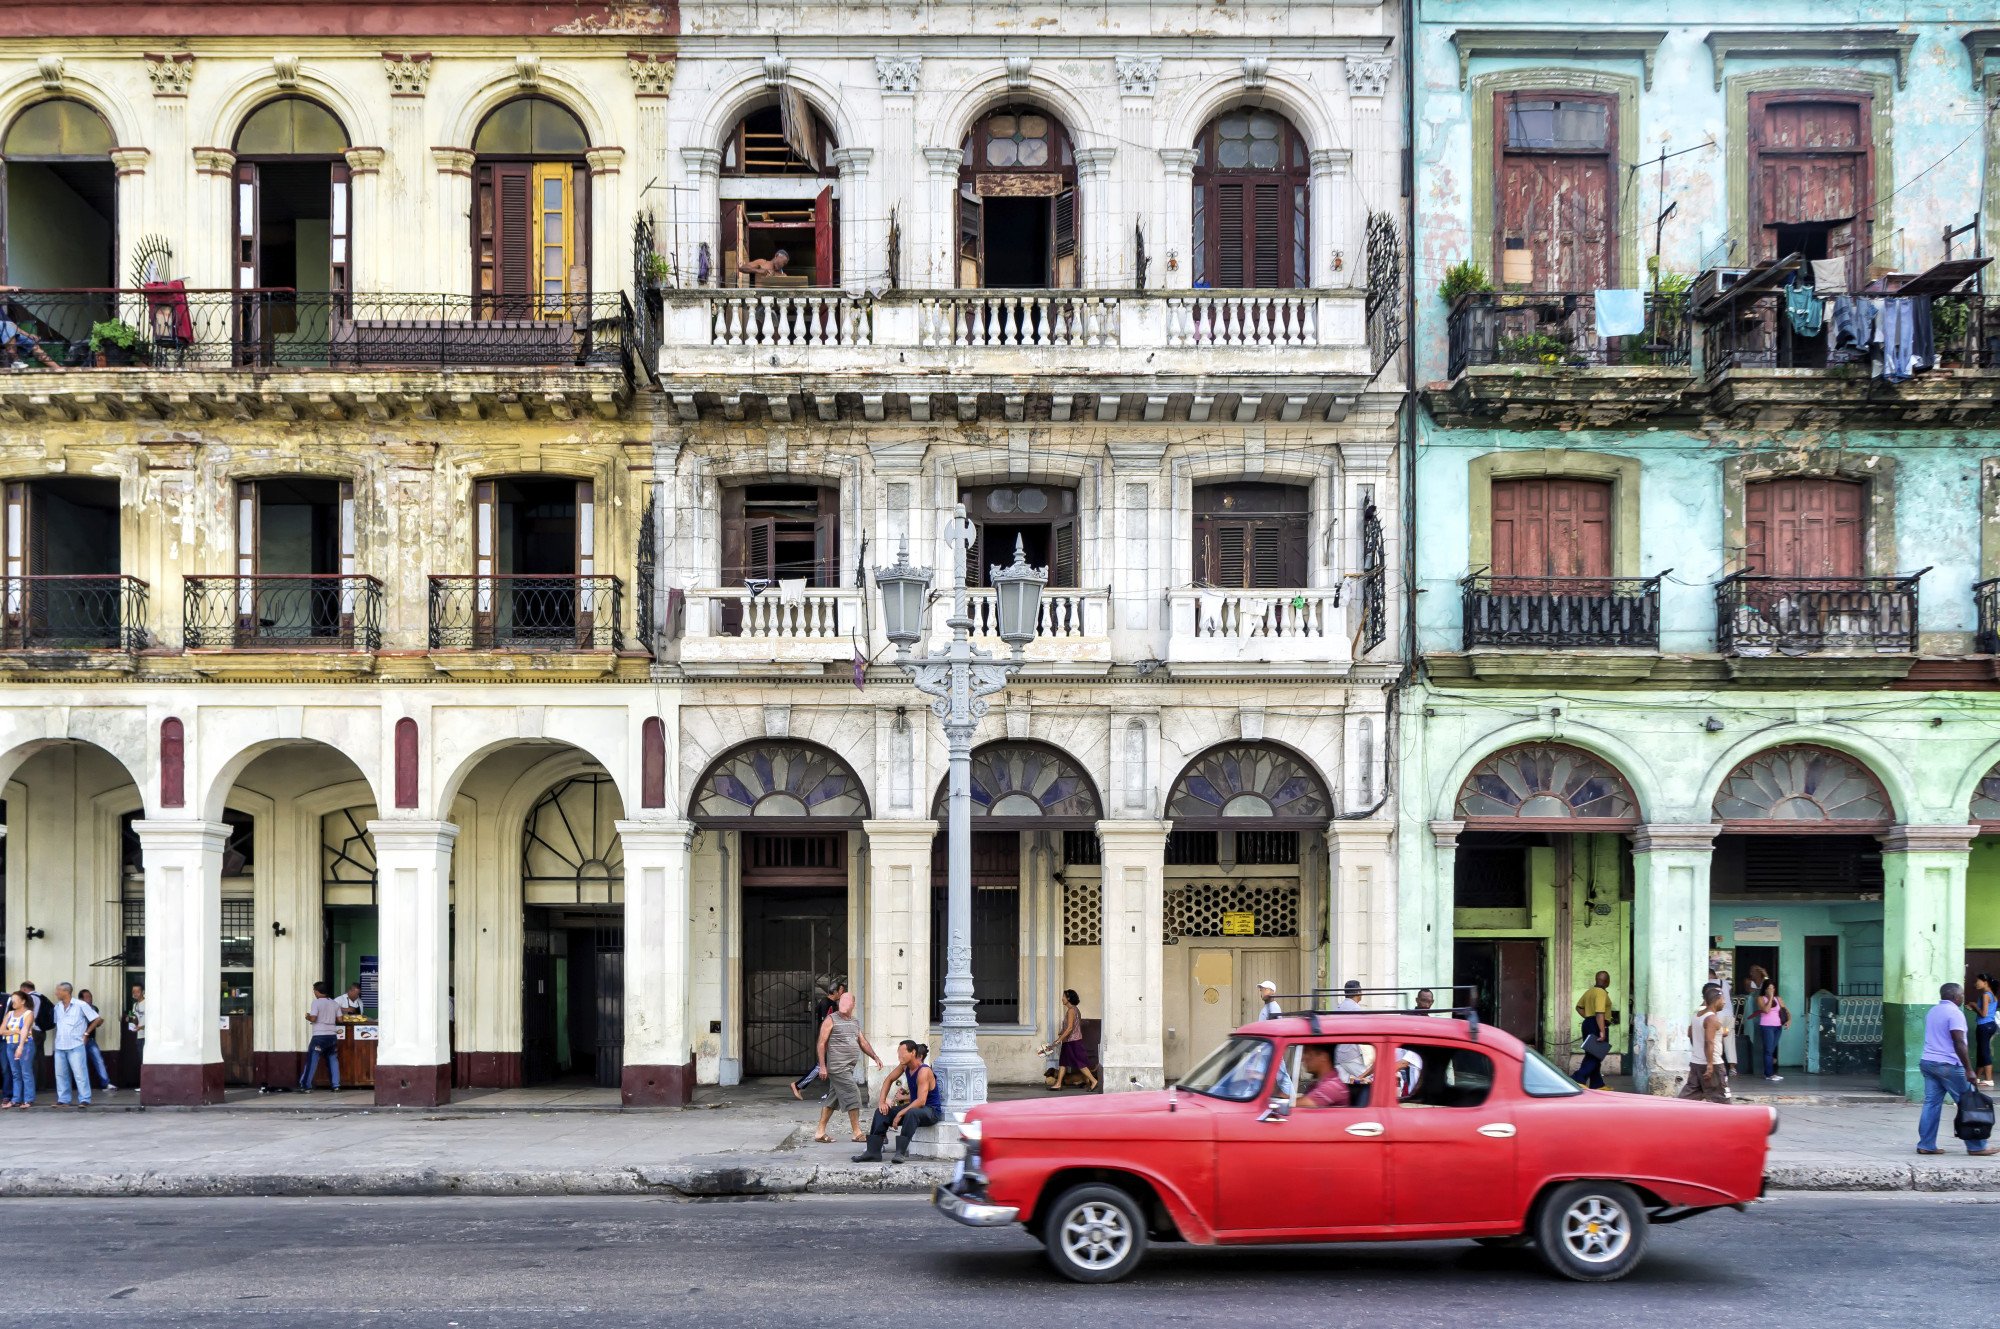 Cuba Havana straatbeeld oldtimer auto gebouwen architectuur